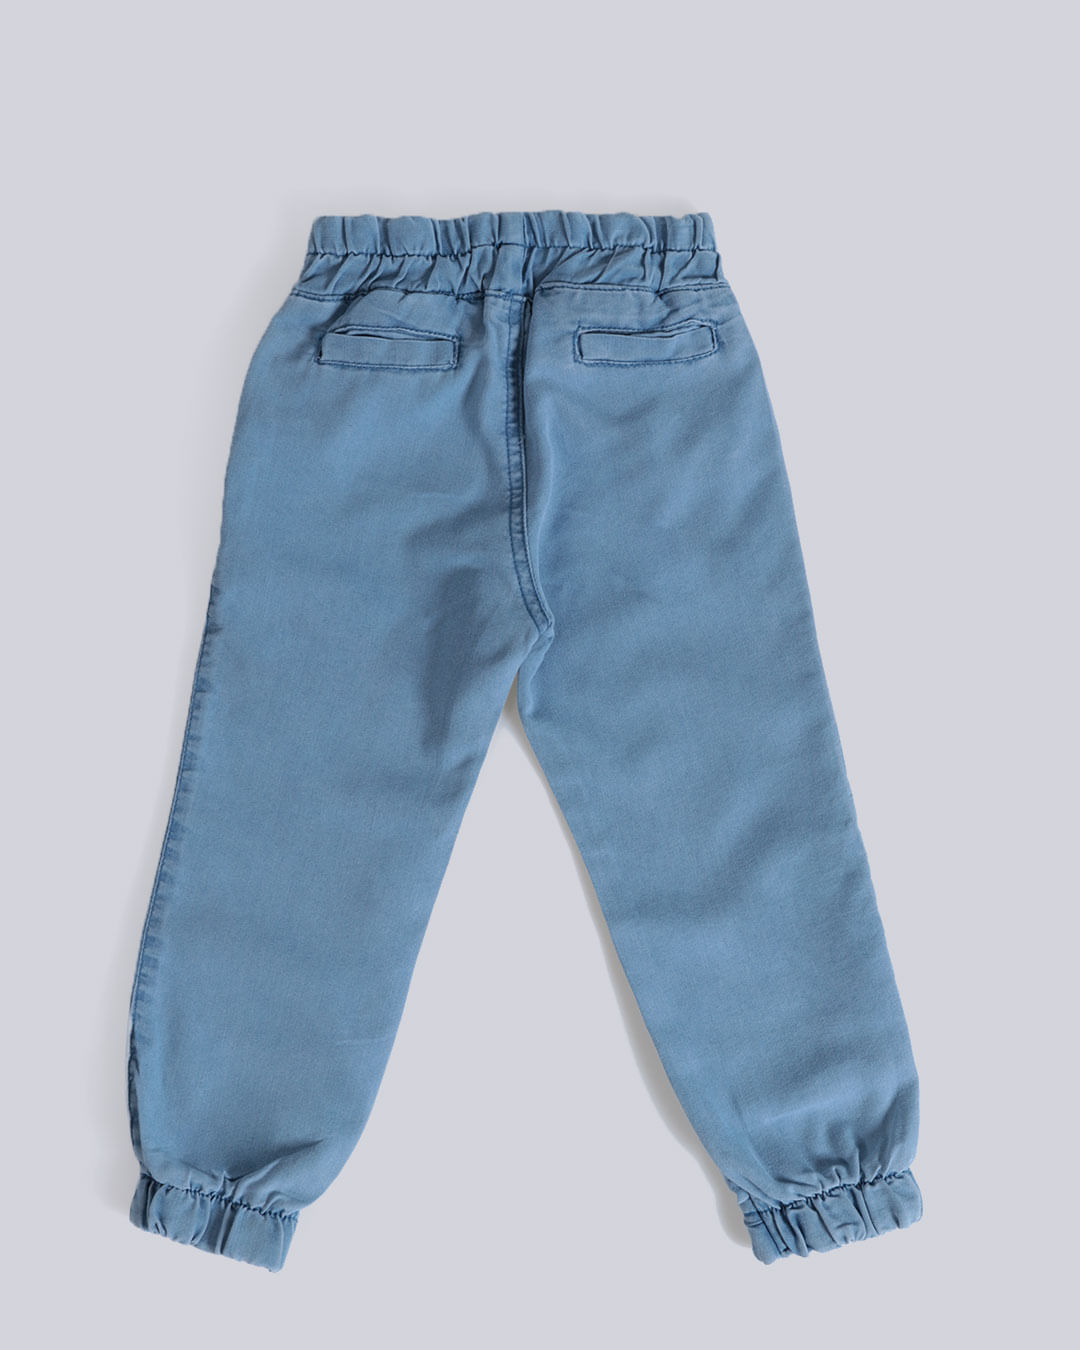 Calca-Jogger-1524-Lc-13---Blue-Jeans-Claro